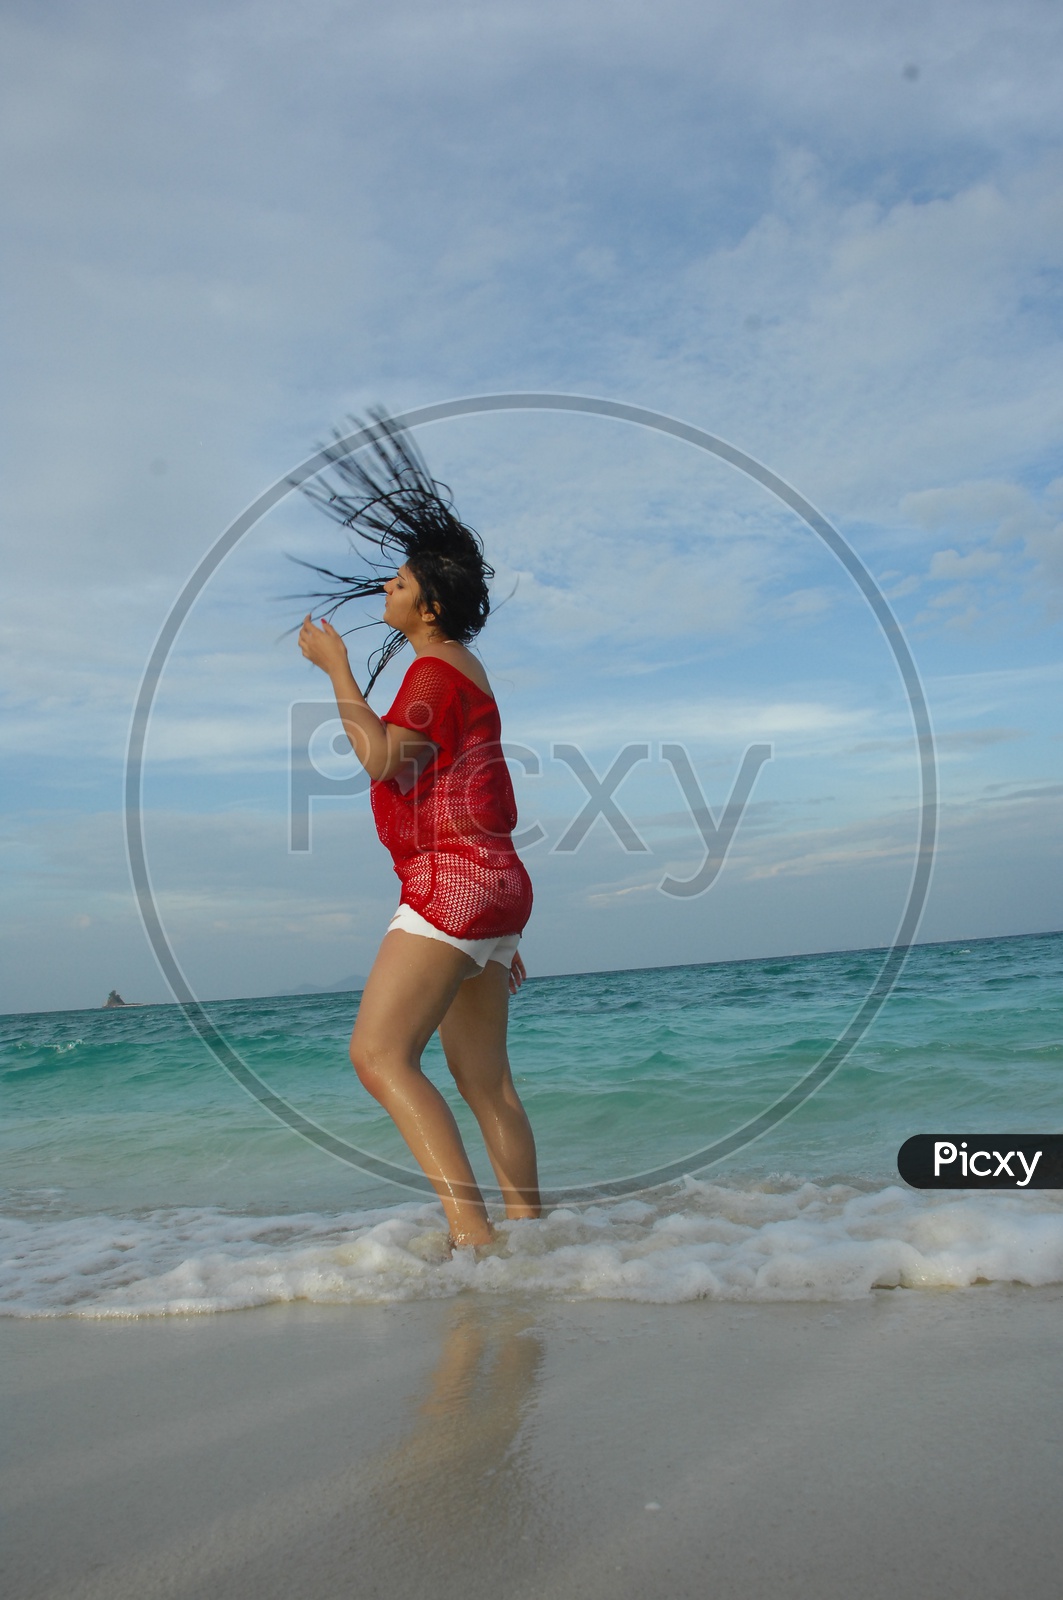 Indian Girl doing a hairflip at the beach